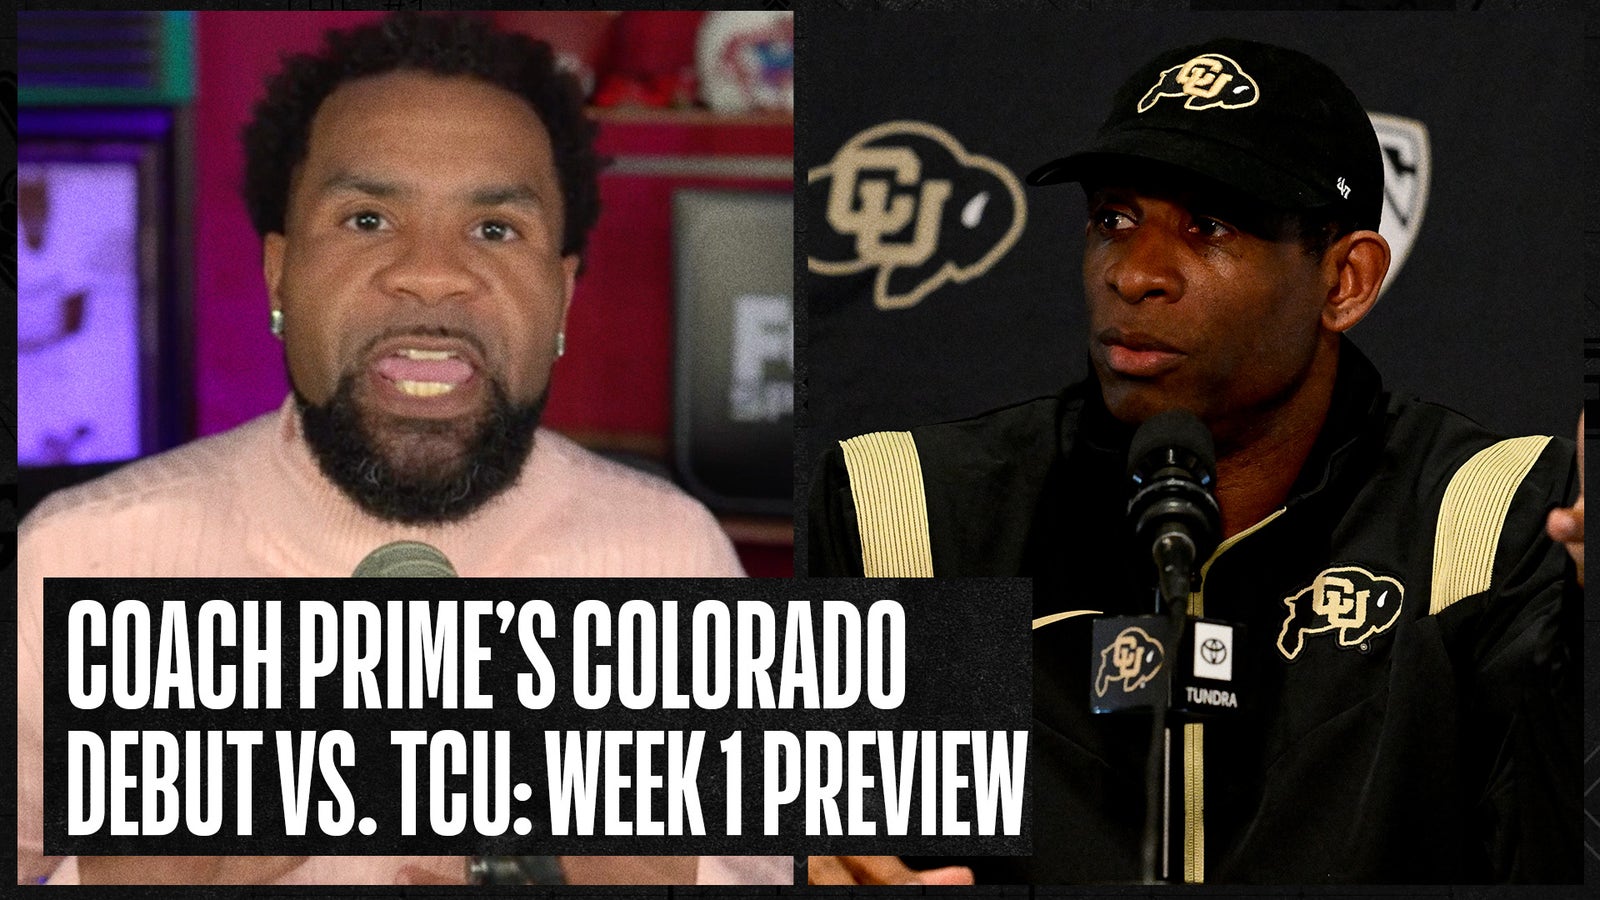 Week 1 preview: Coach Prime's Colorado debut vs. TCU, more!